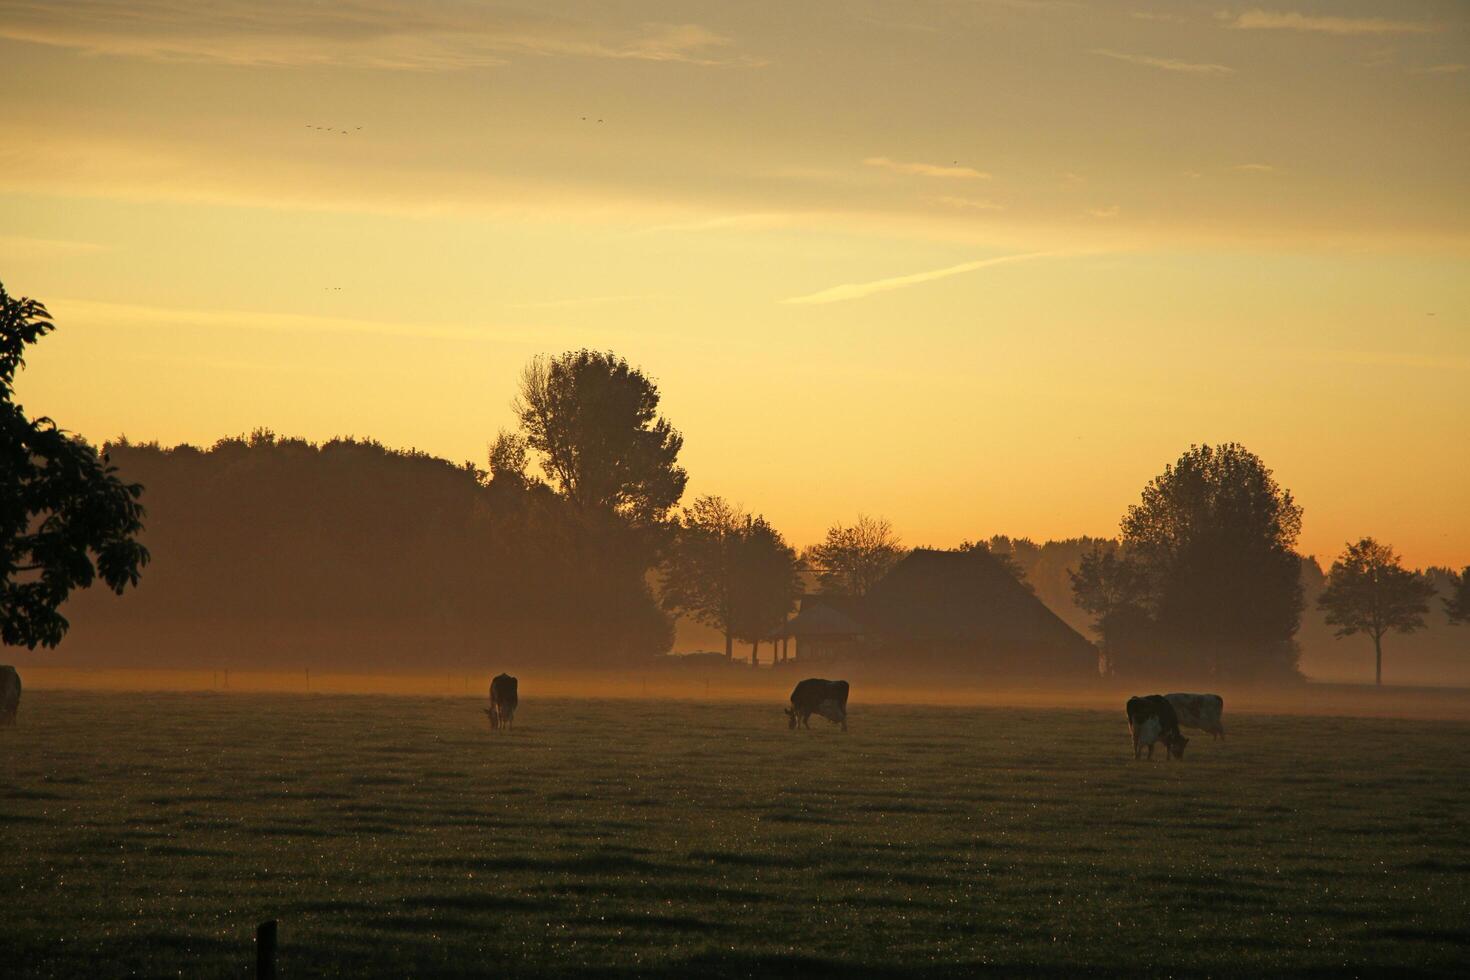 Dom amanecer en un holandés paisaje, Mañana Rocío, pasto vacas foto